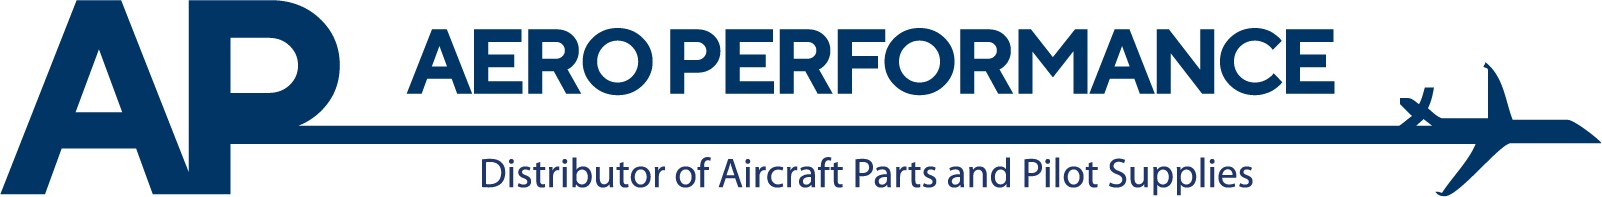 Aero Performance